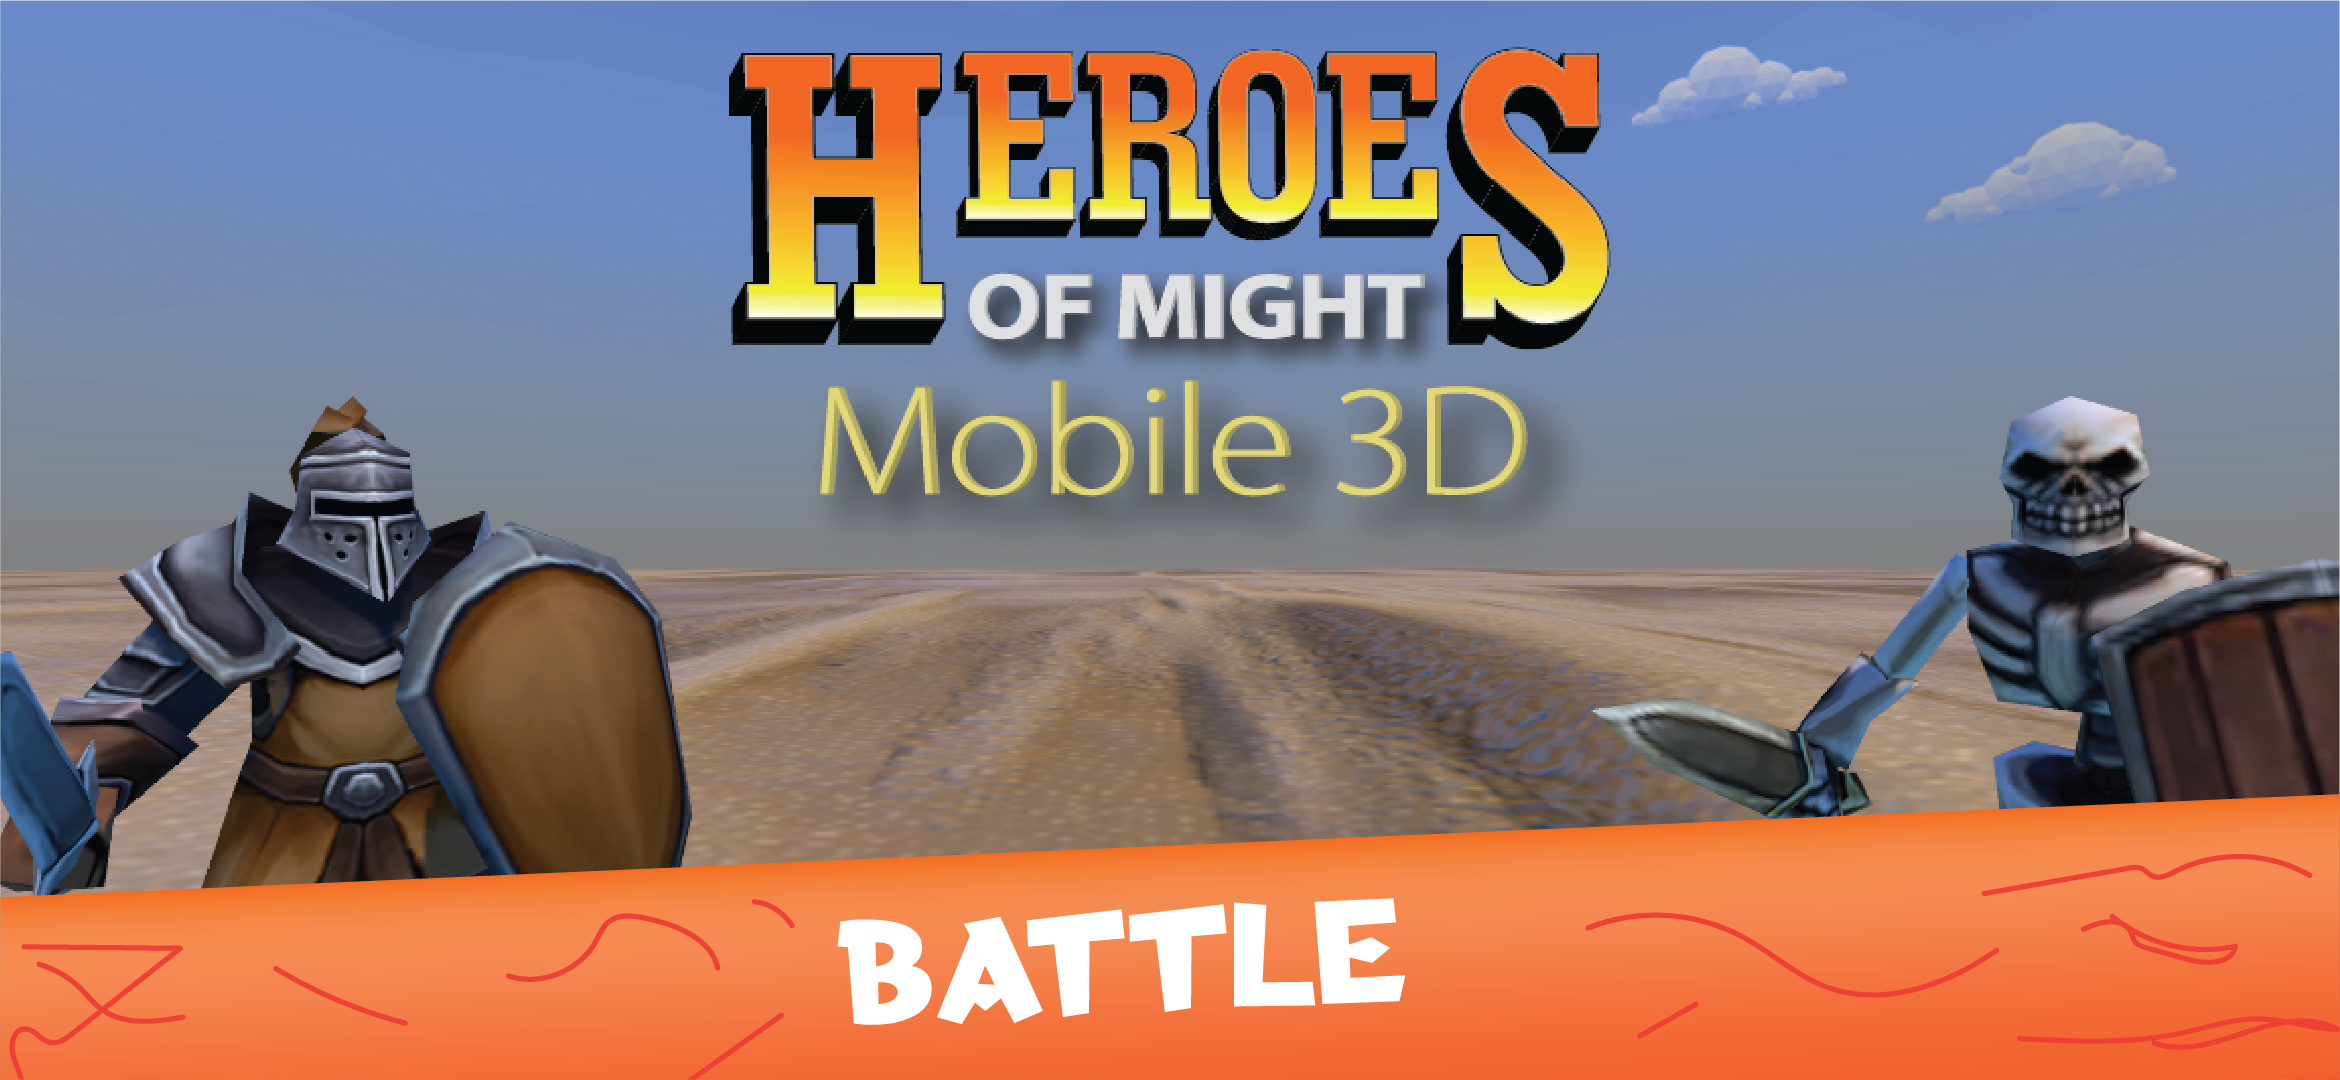 Screenshot 1 of Anh hùng của Might Mobile 3D 0.1